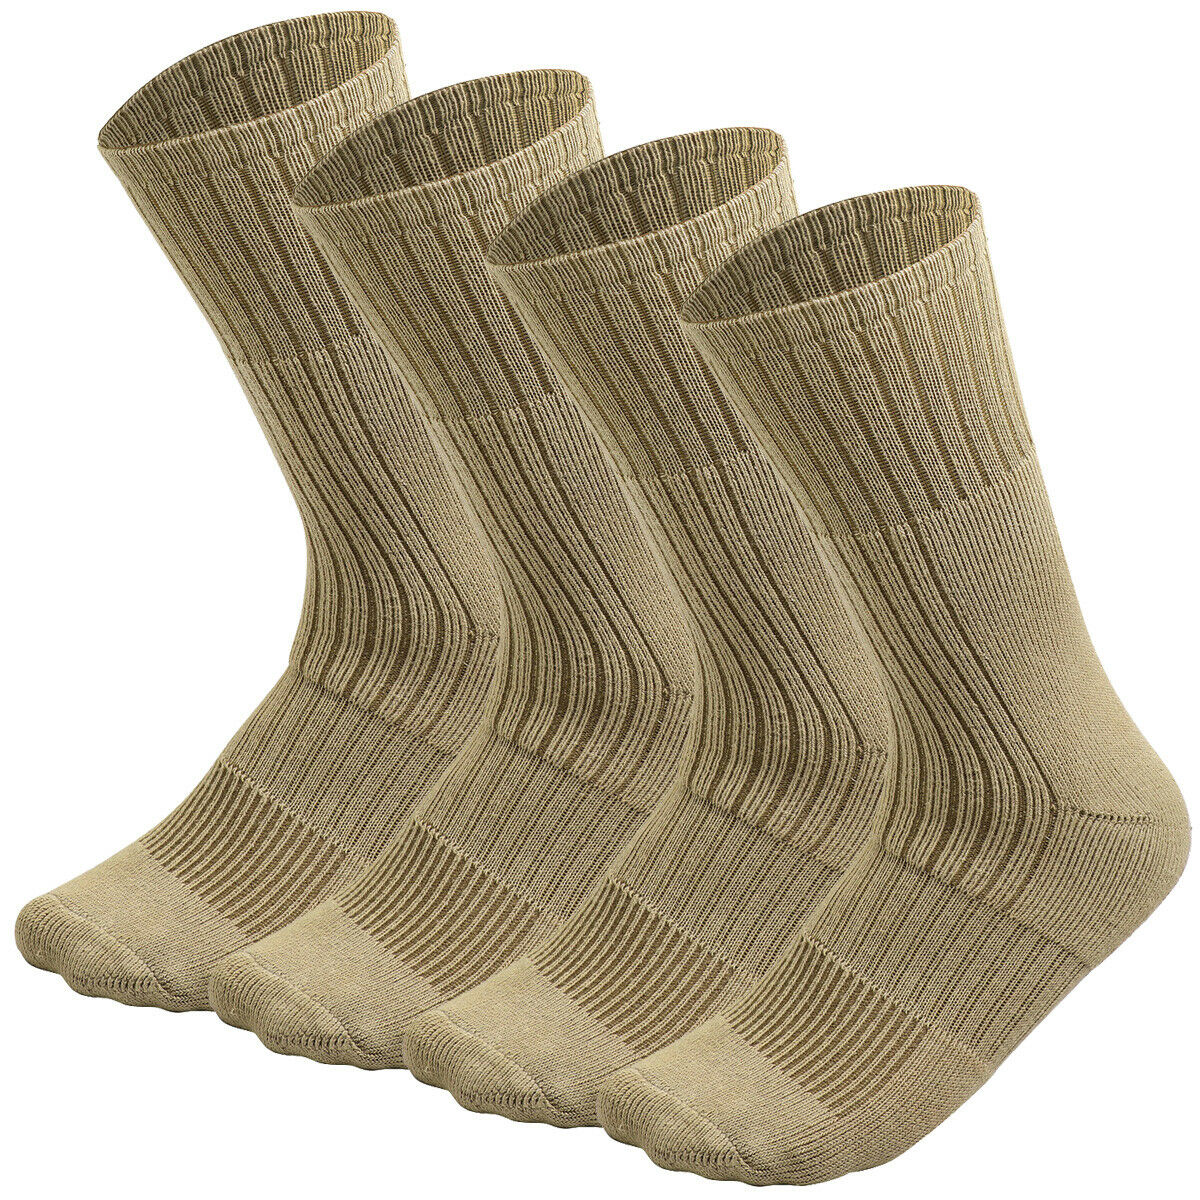 military boot socks